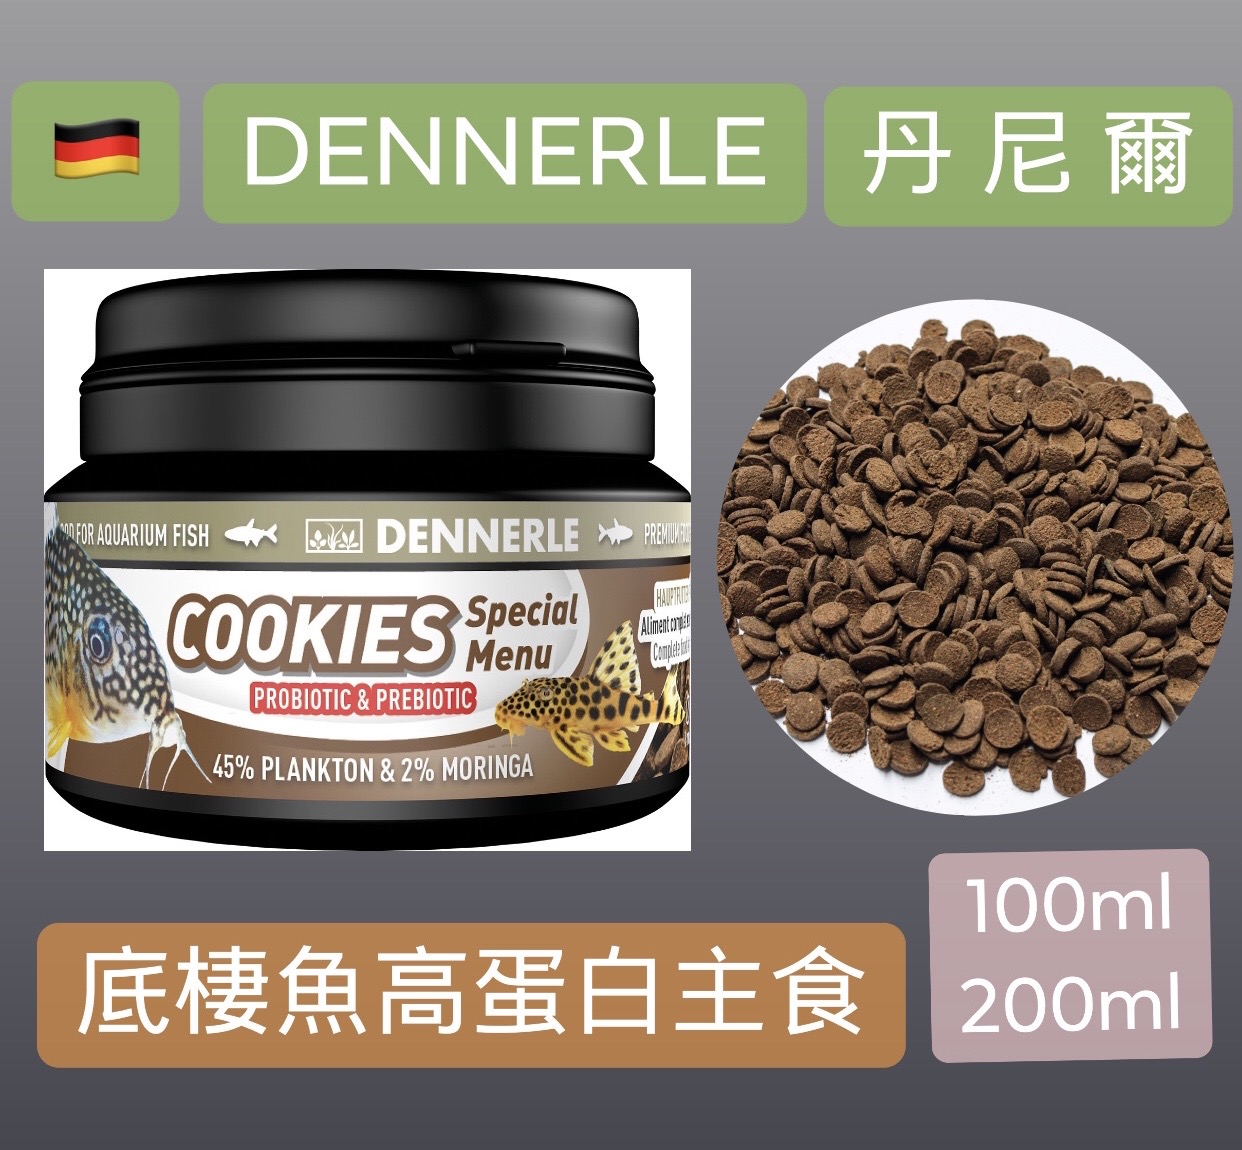 DENNERLE Cookies SpecialMenu, 100ml